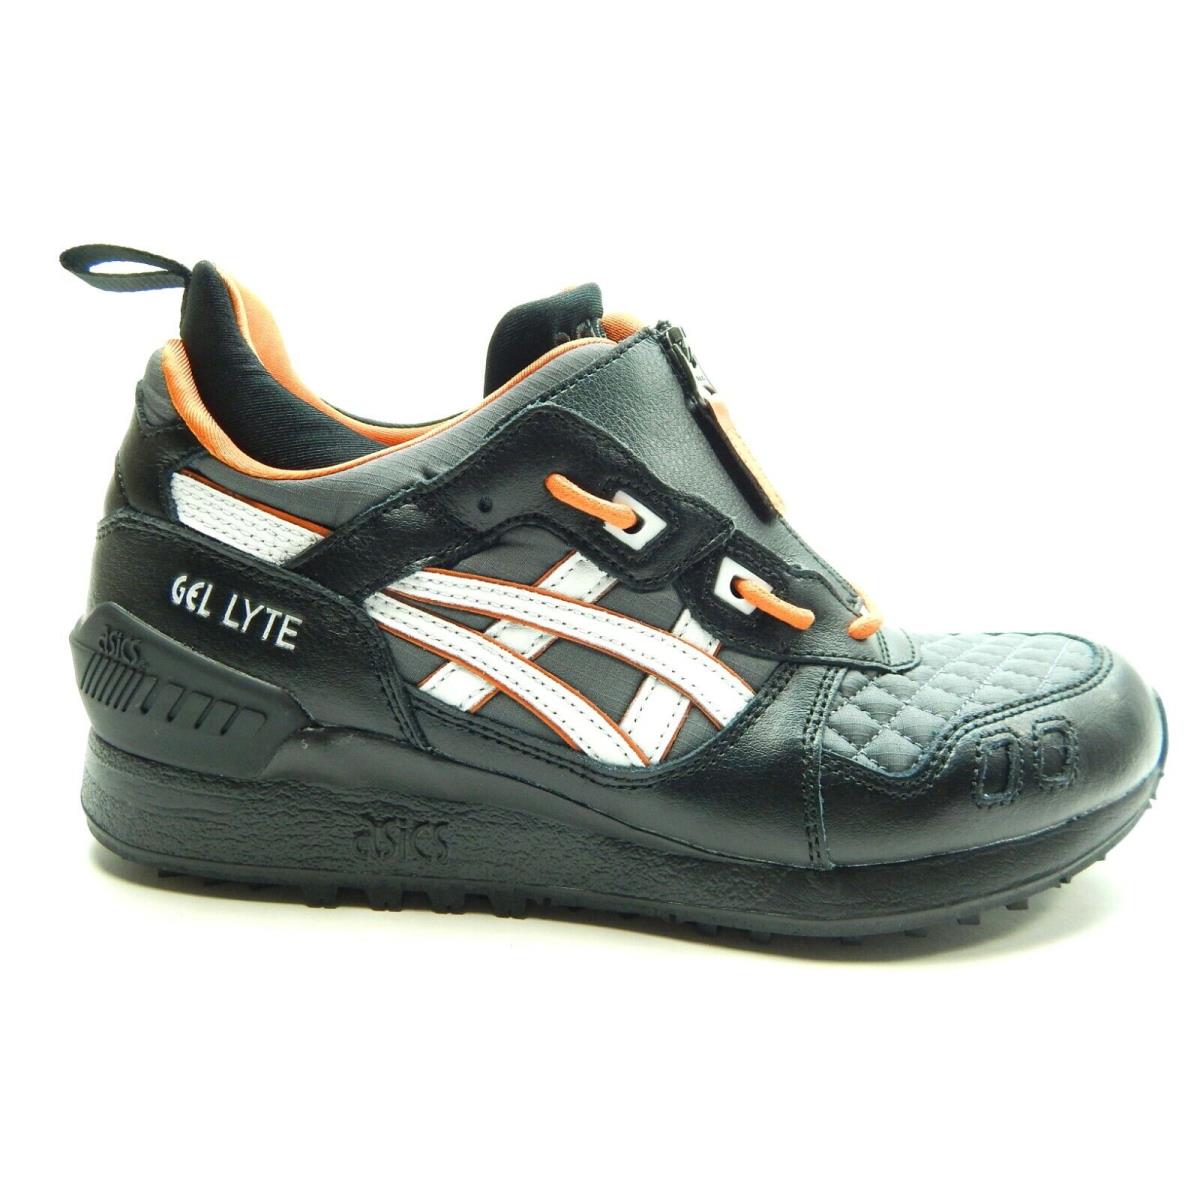 Asics Gel Lyte MT Black White Men Shoes Size 7.5